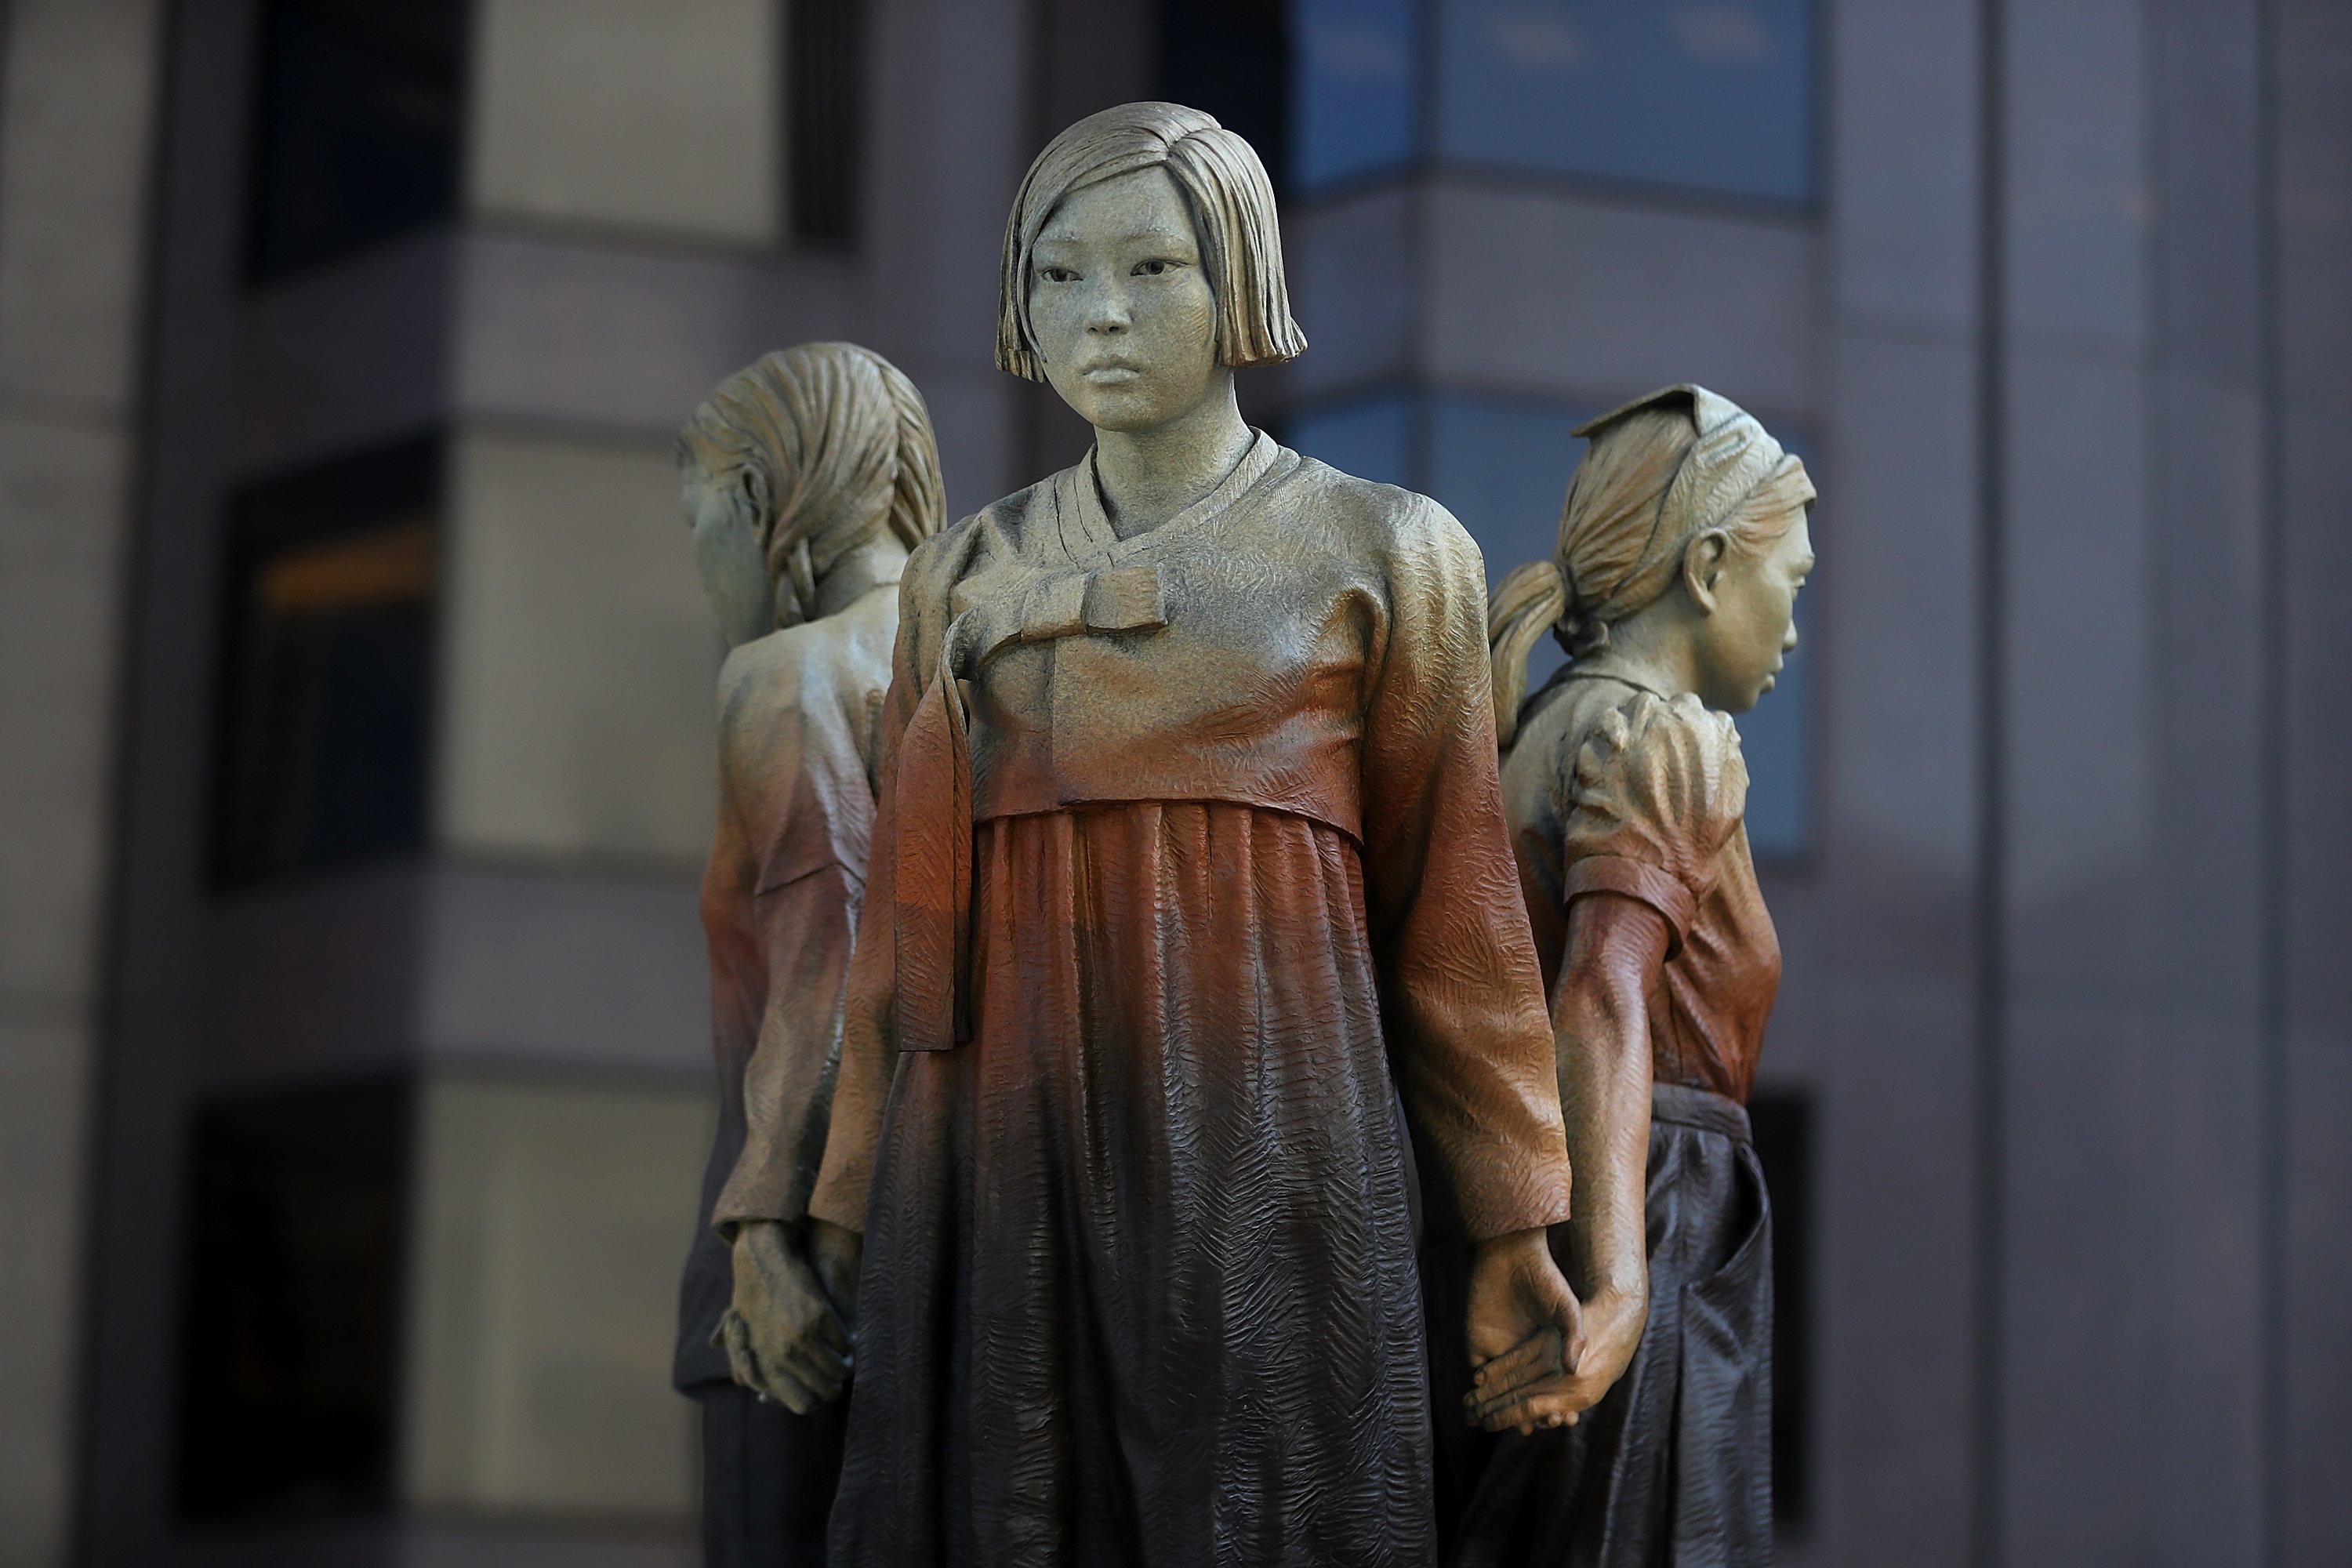 Philadelphia Art Commission approves 'comfort women' statue to